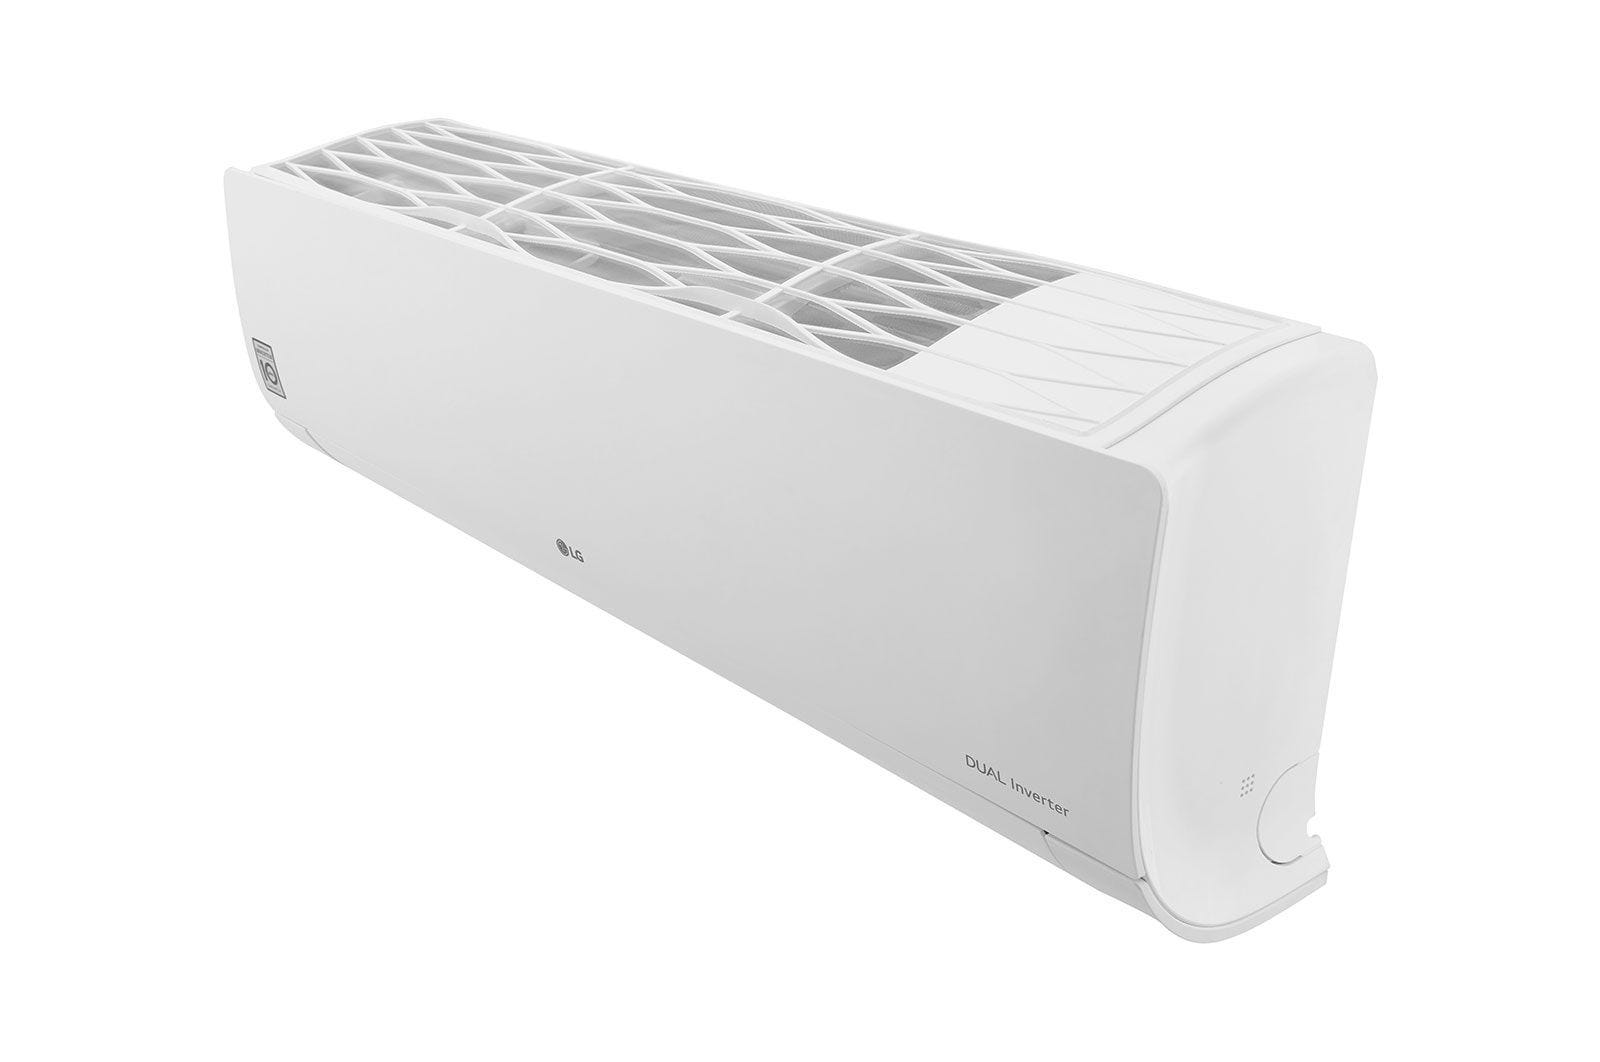 LG Dual Inverter Split Air Conditioner, Cooling Only, 2.25 HP, White - S4-Q18JA2ZC